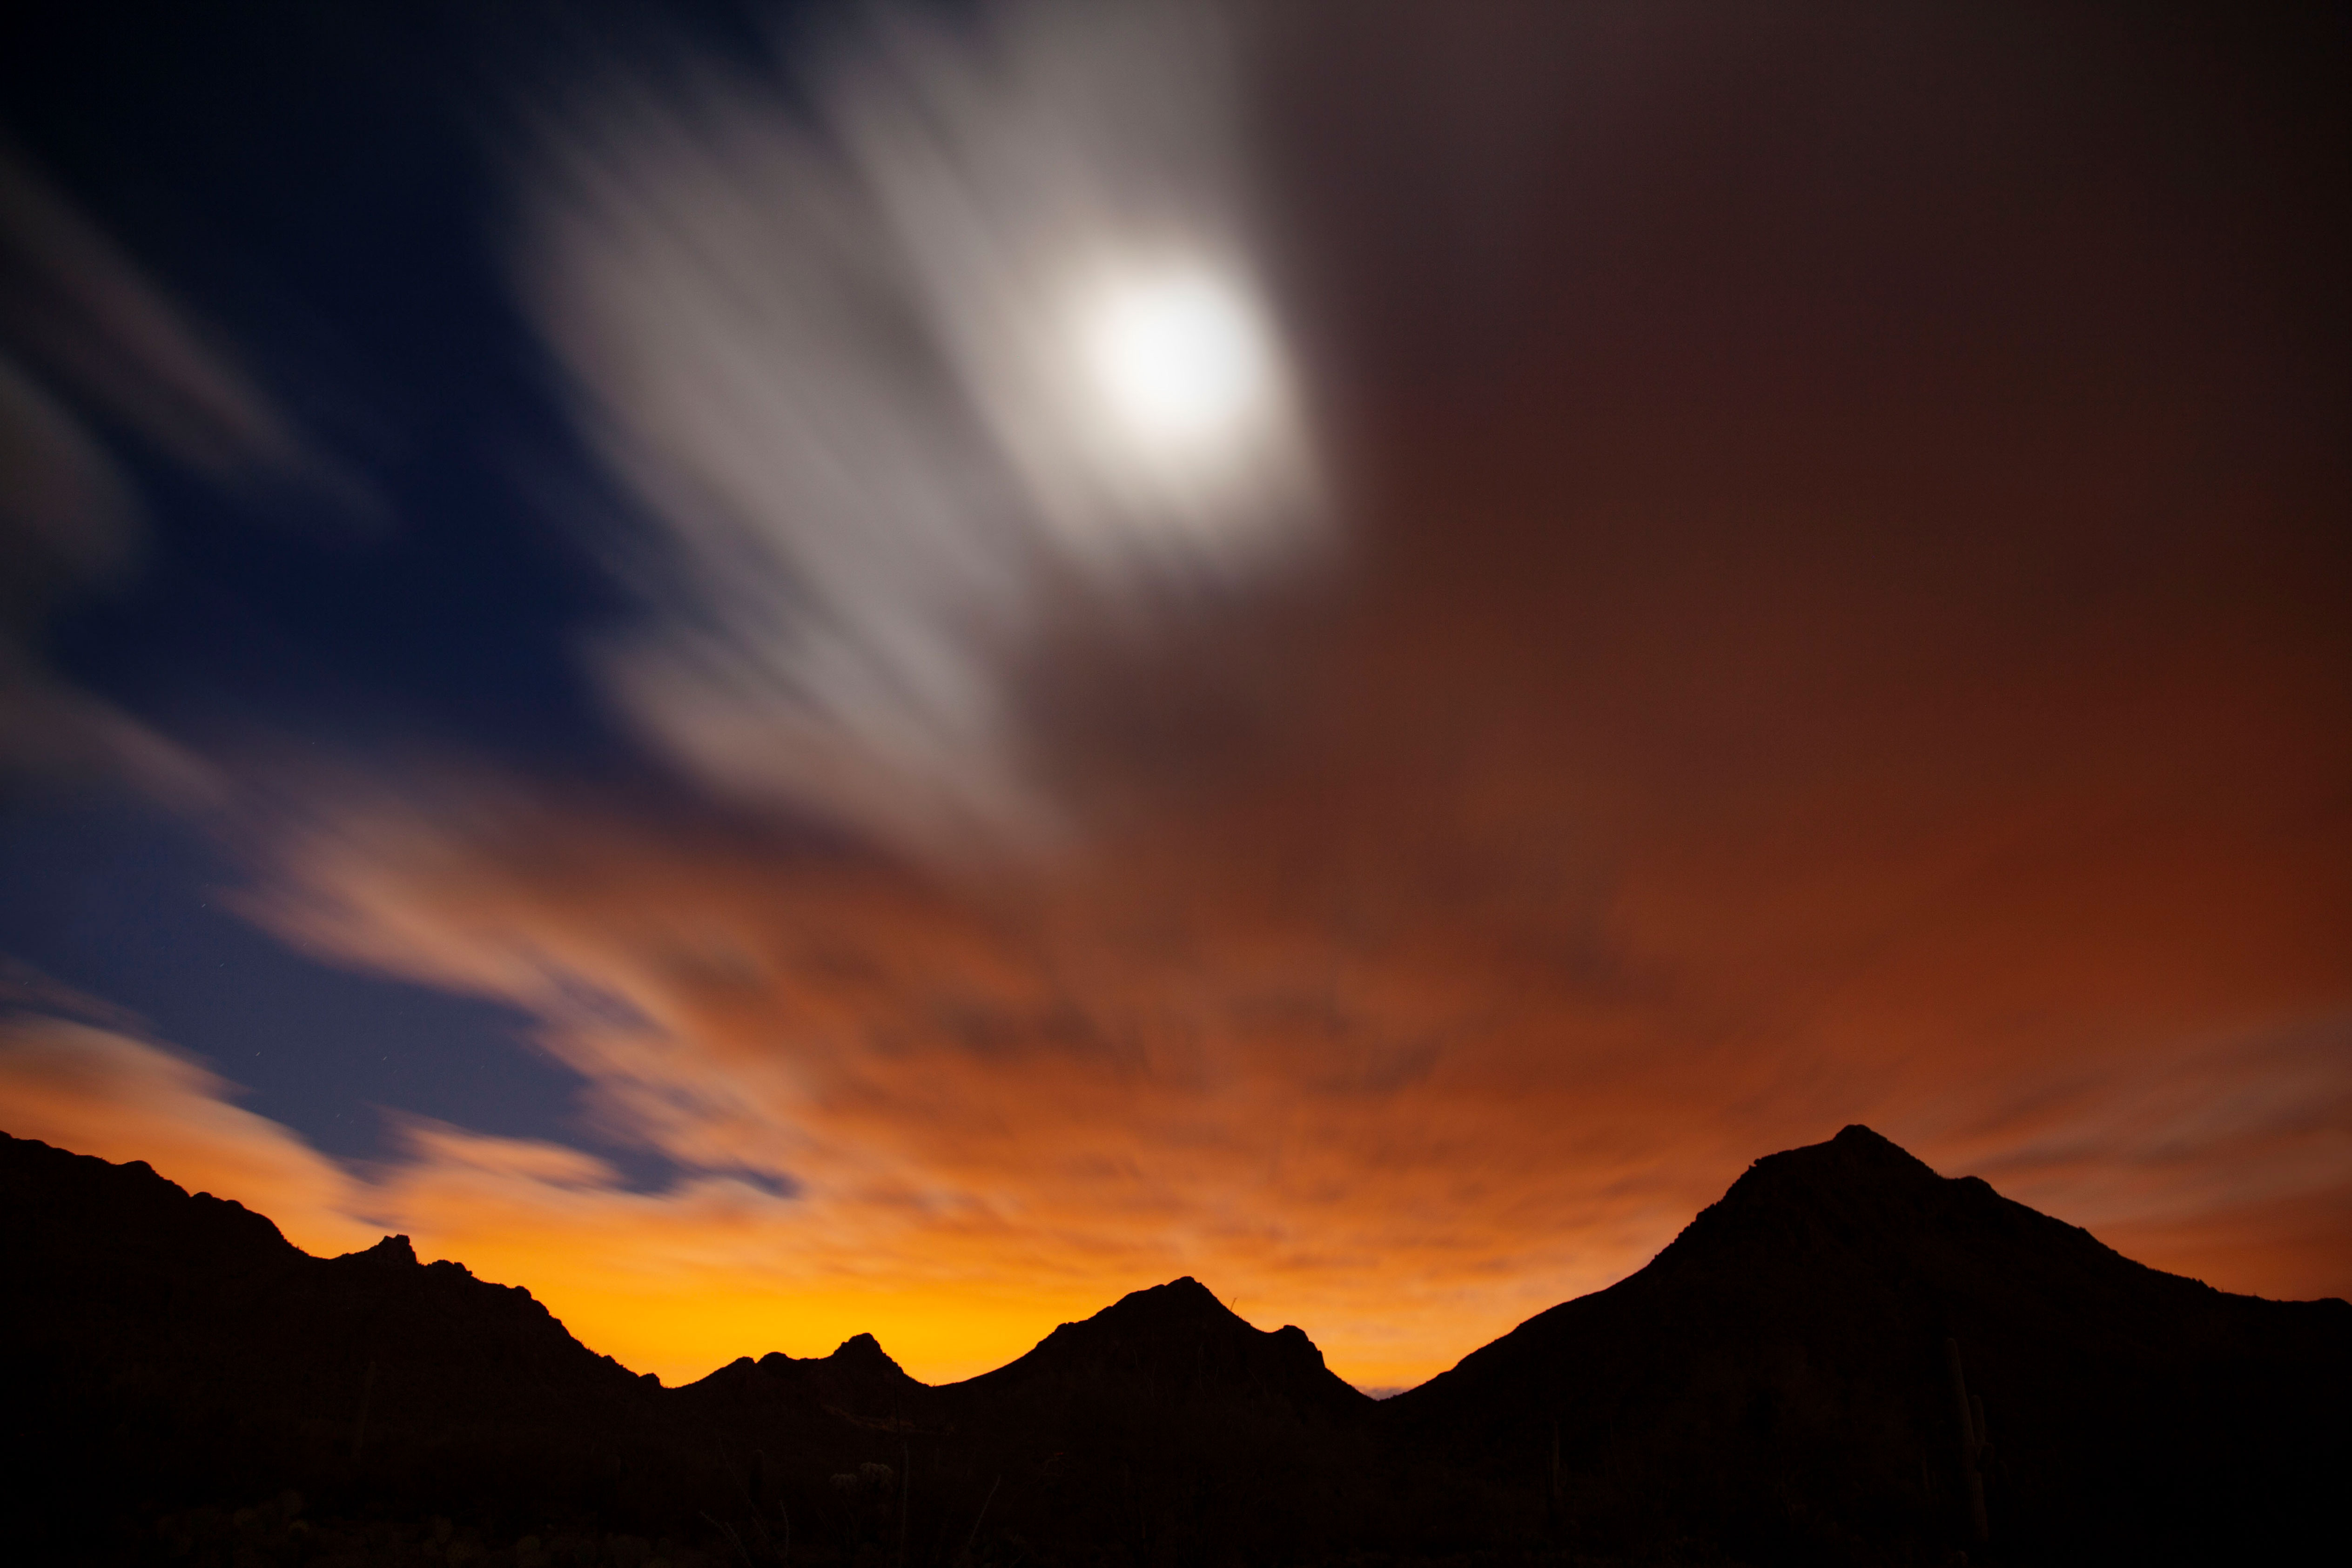 The night sky at Tucson Mts., Arizona (Saguaro National Park West)